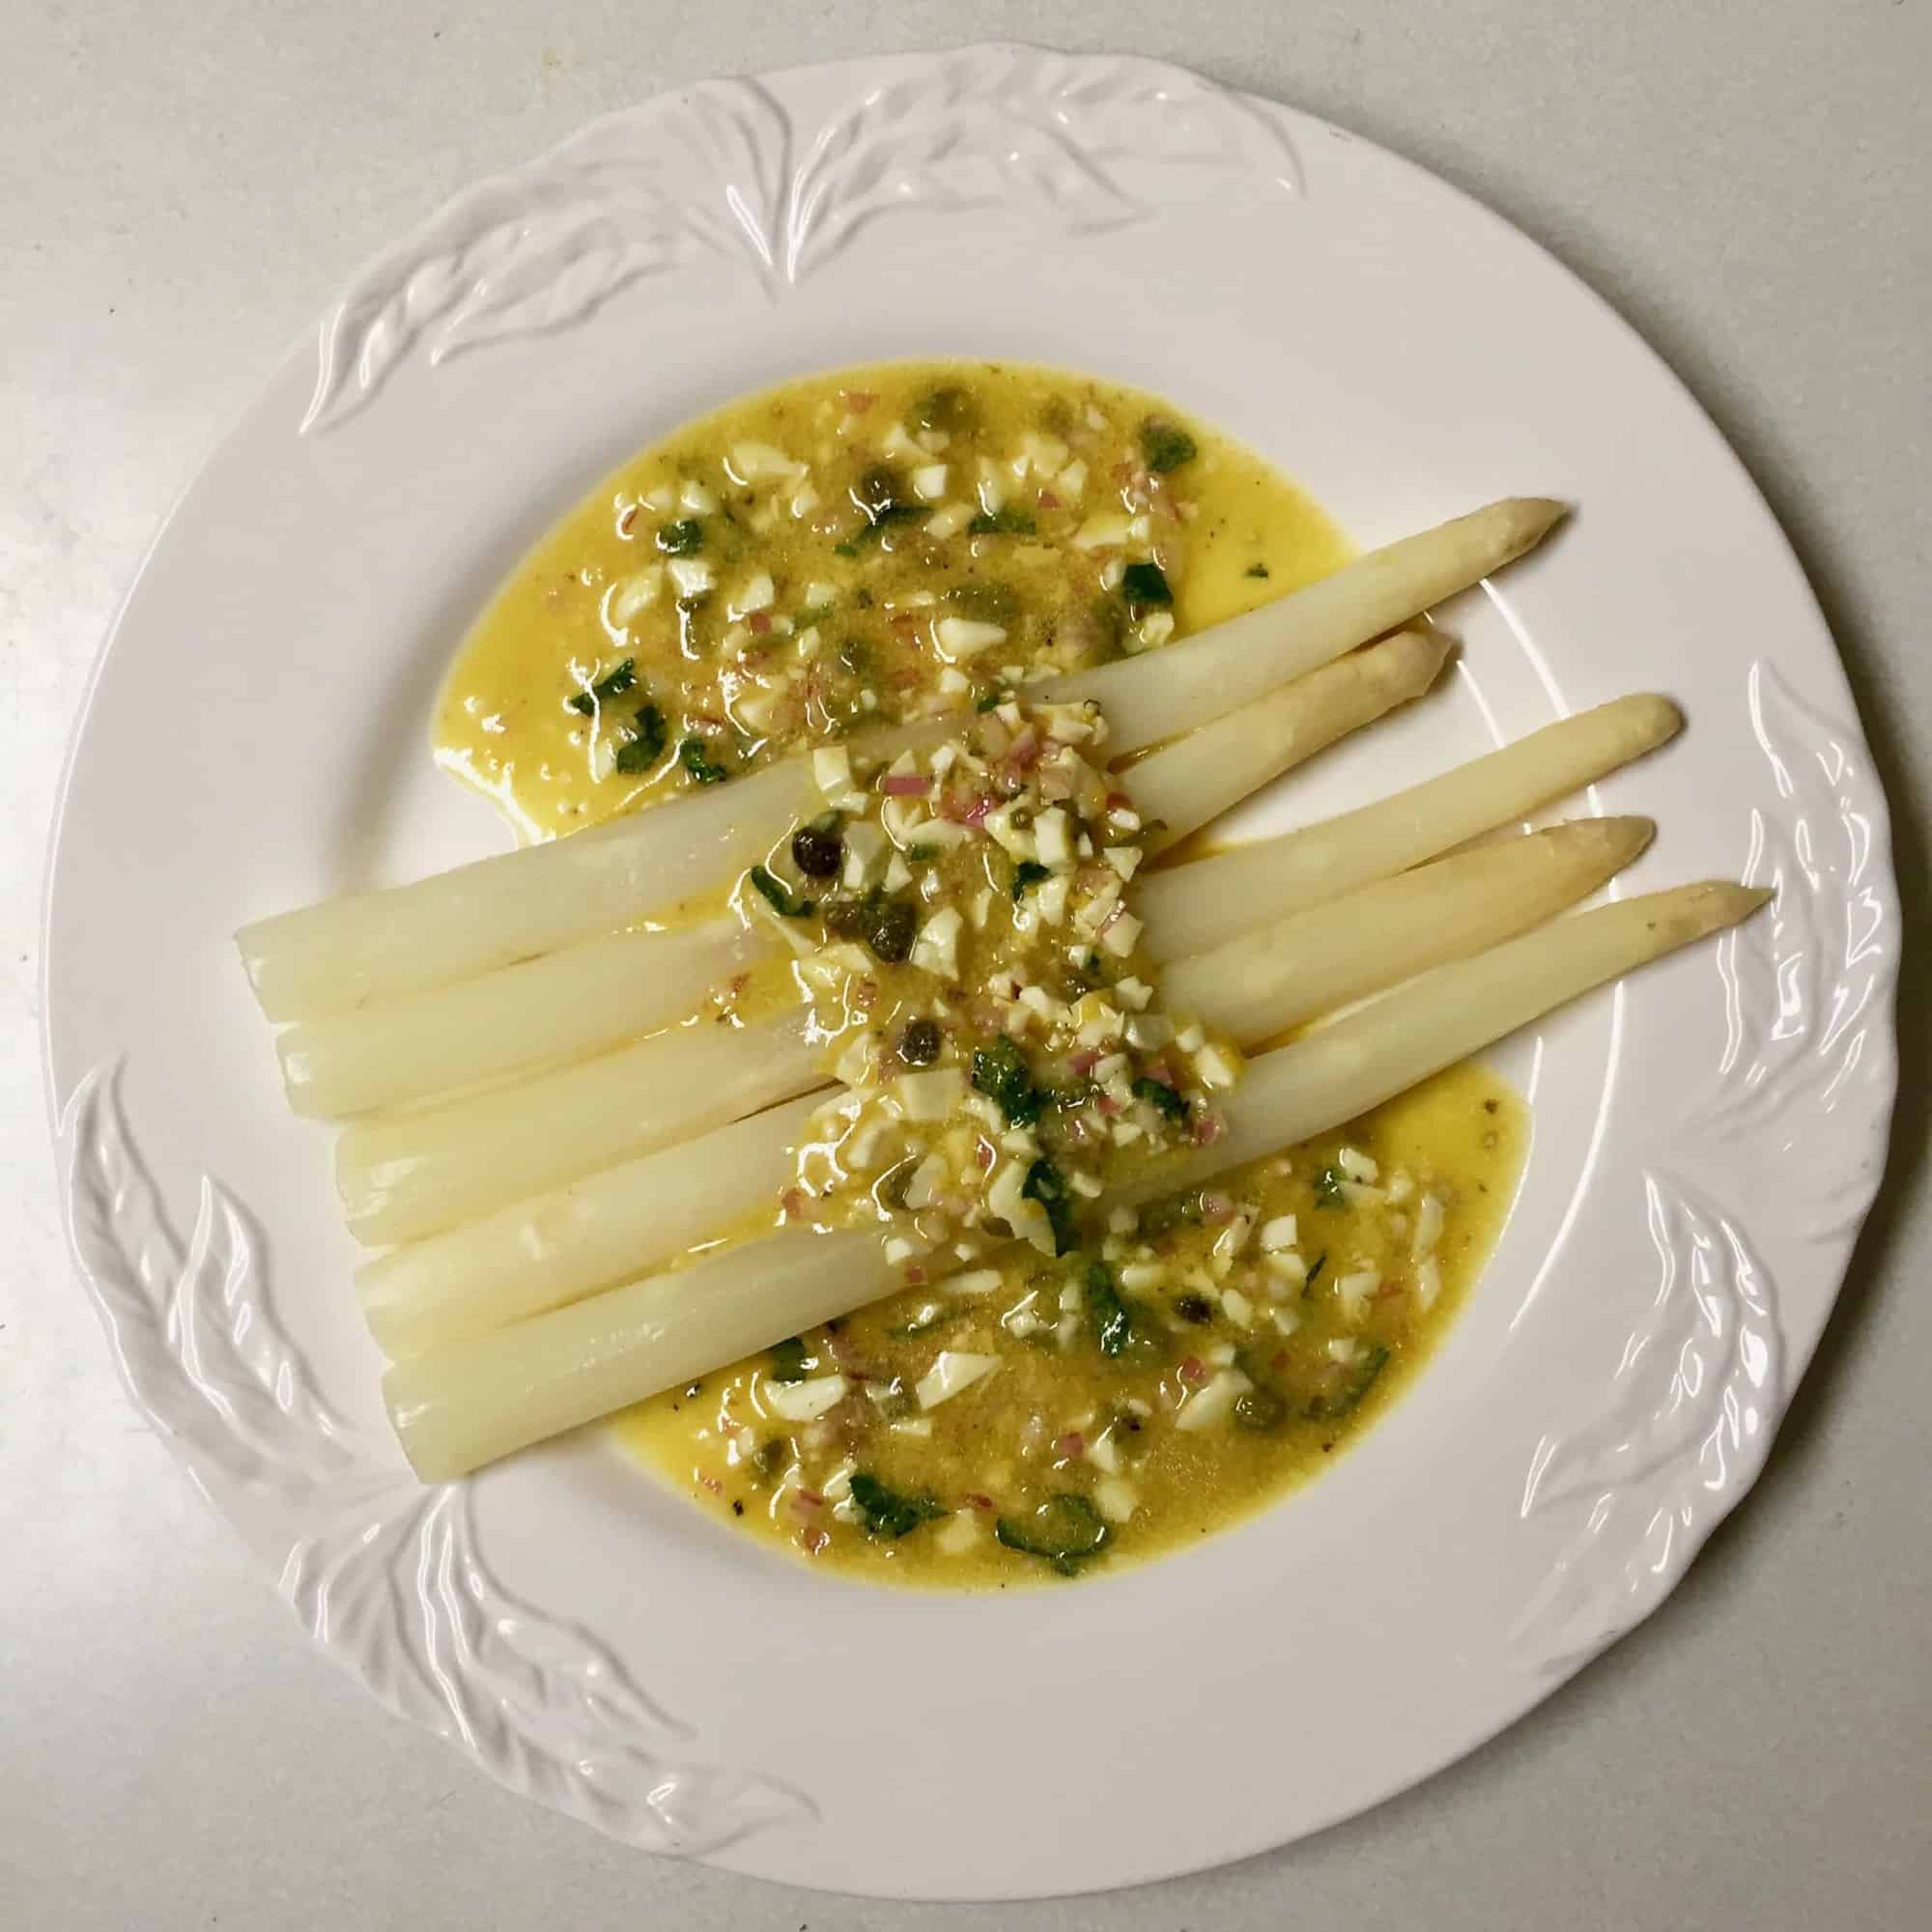 Direct from Lyon: White Asparagus with Sauce Gribiche — Asperges Blancs avec Sauce Gribiche